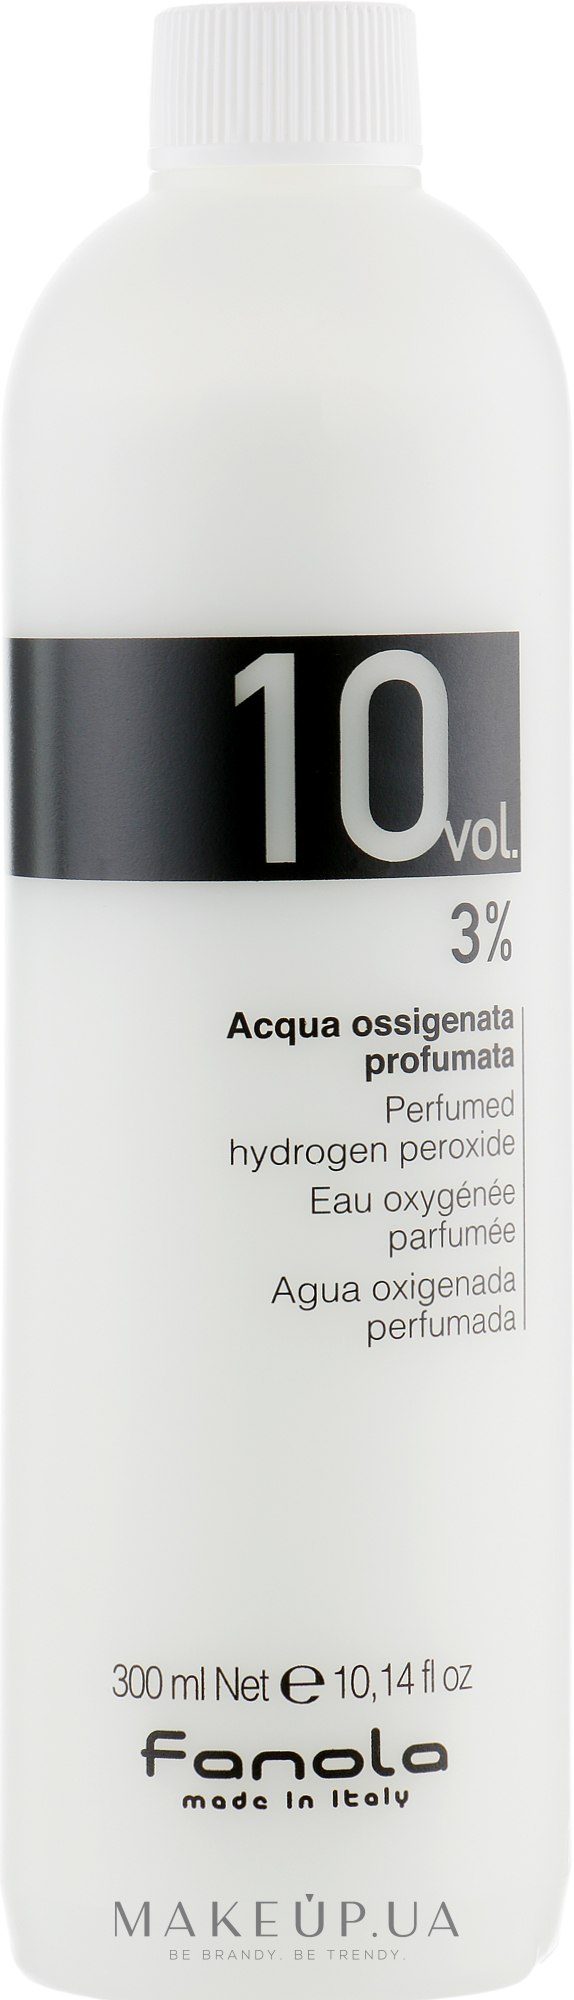 Окислювач 10 vol 3% - Fanola Perfumed Hydrogen Peroxide Hair Oxidant — фото 300ml